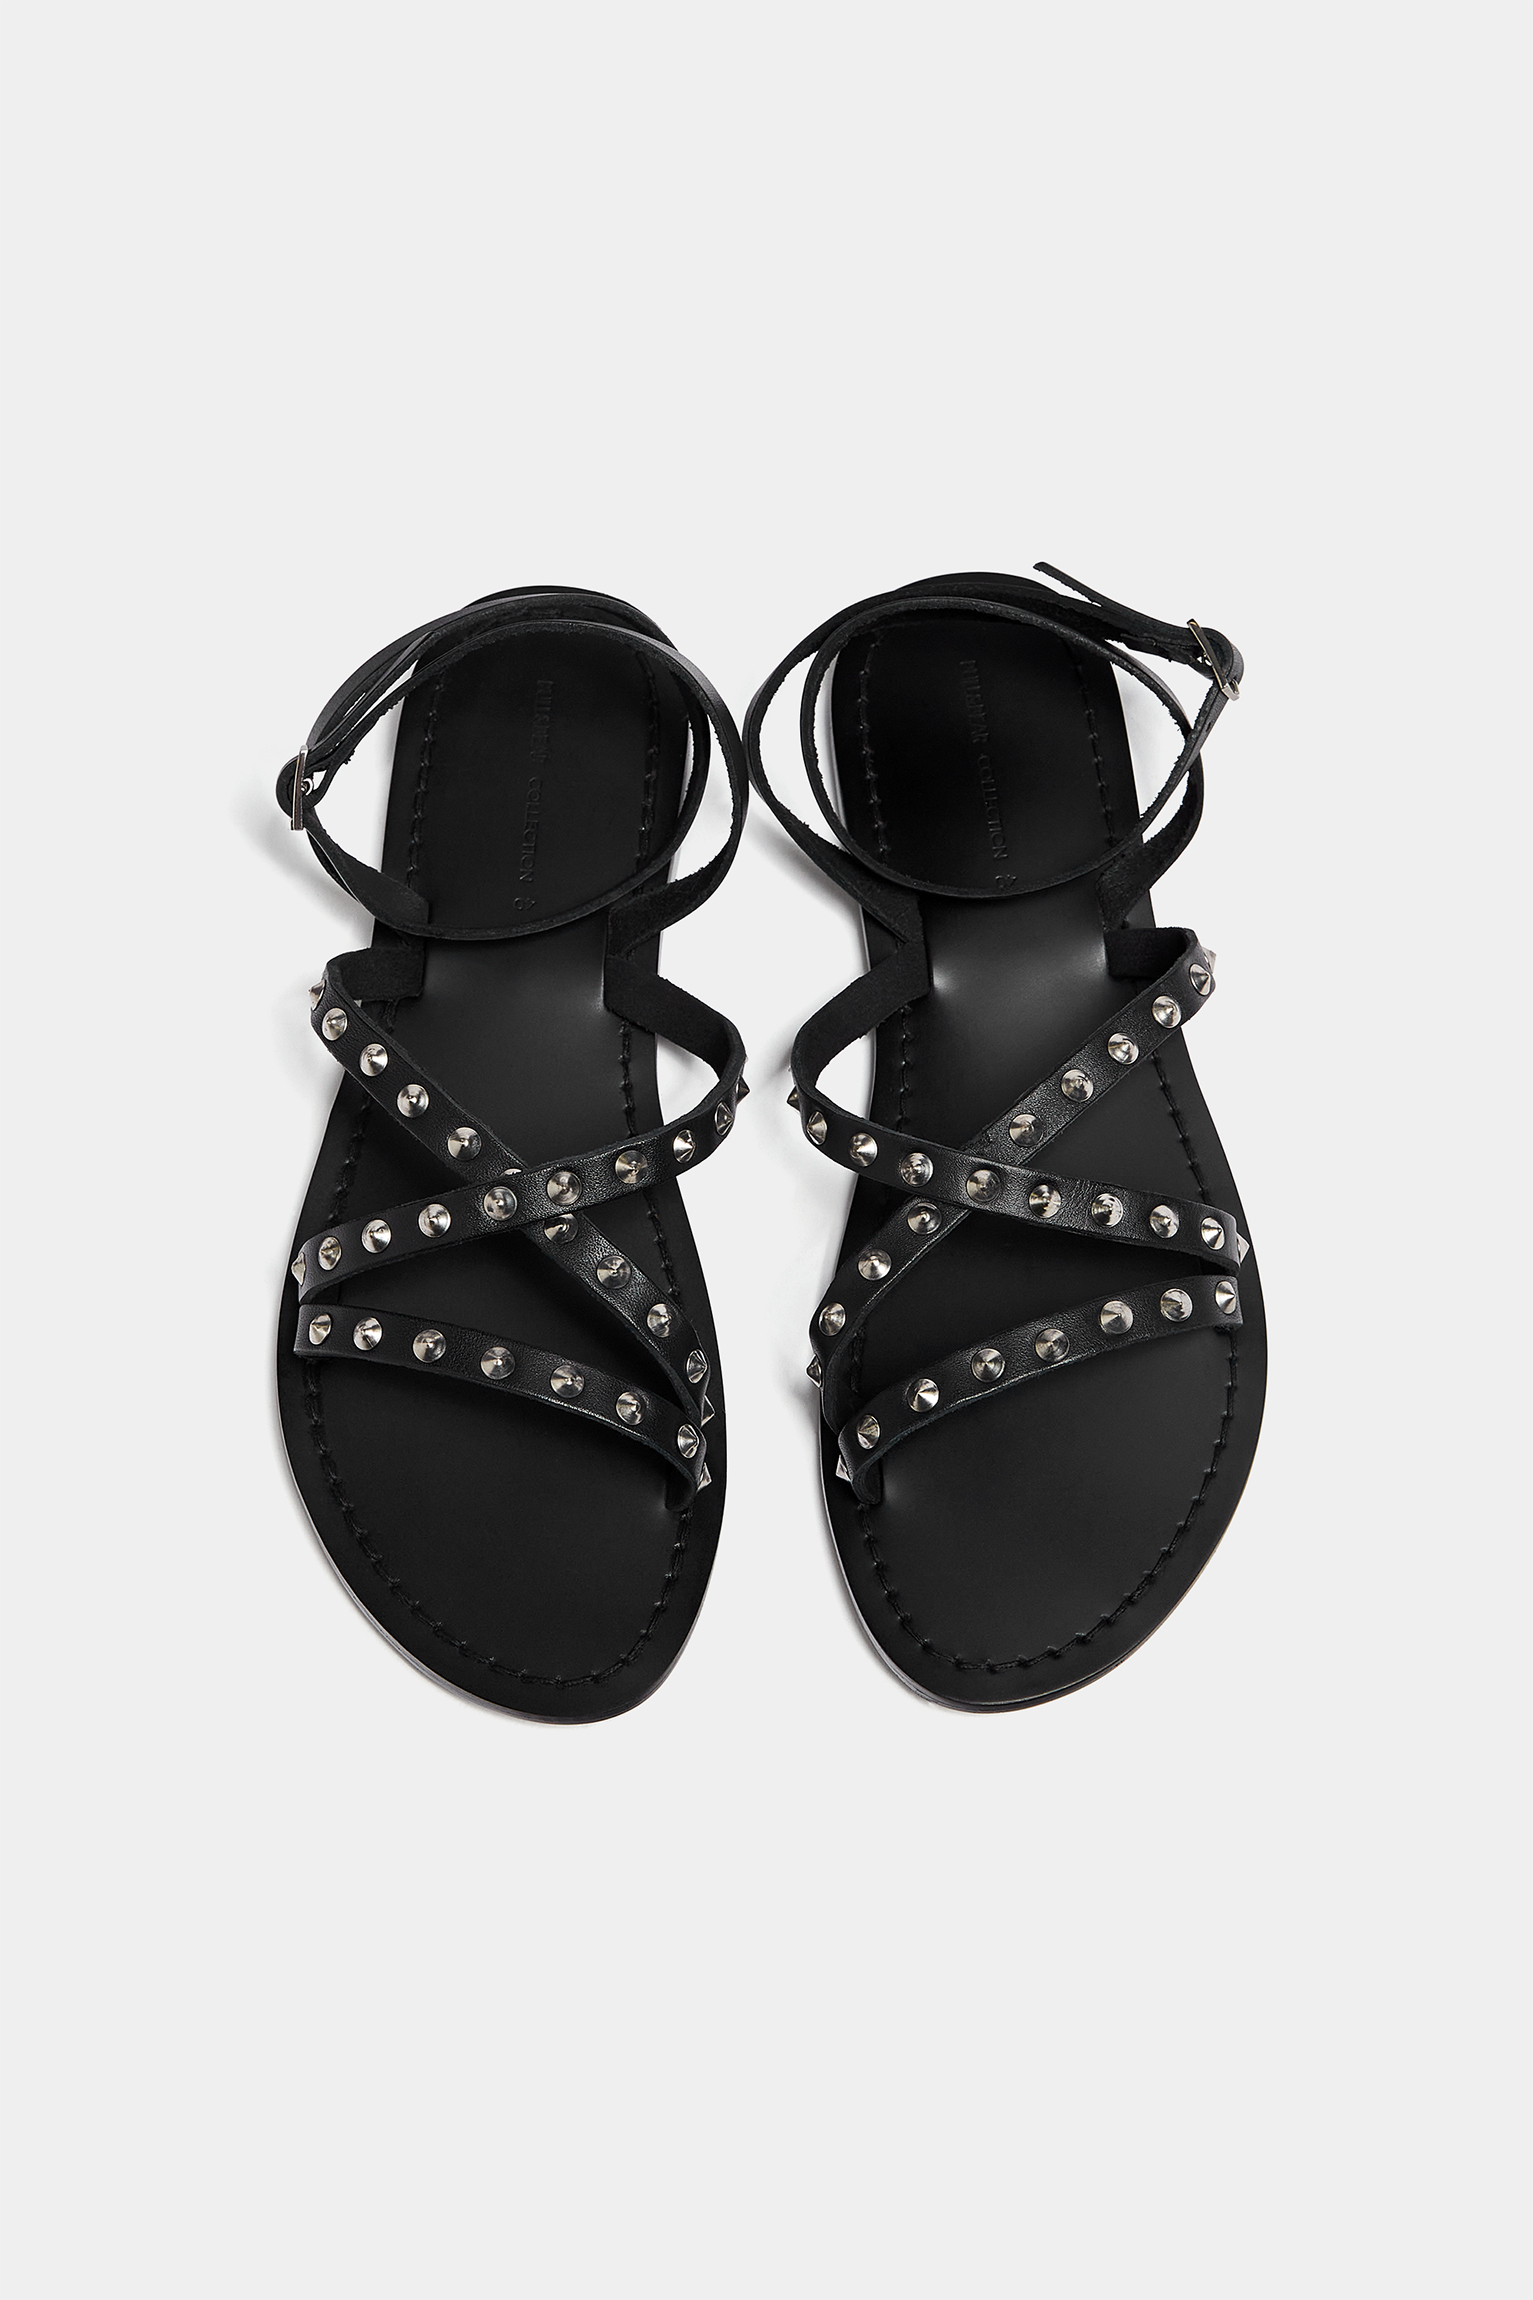 Lunar Renoir Black Sandal - Ladies Sandals from Lunar Shoes UK